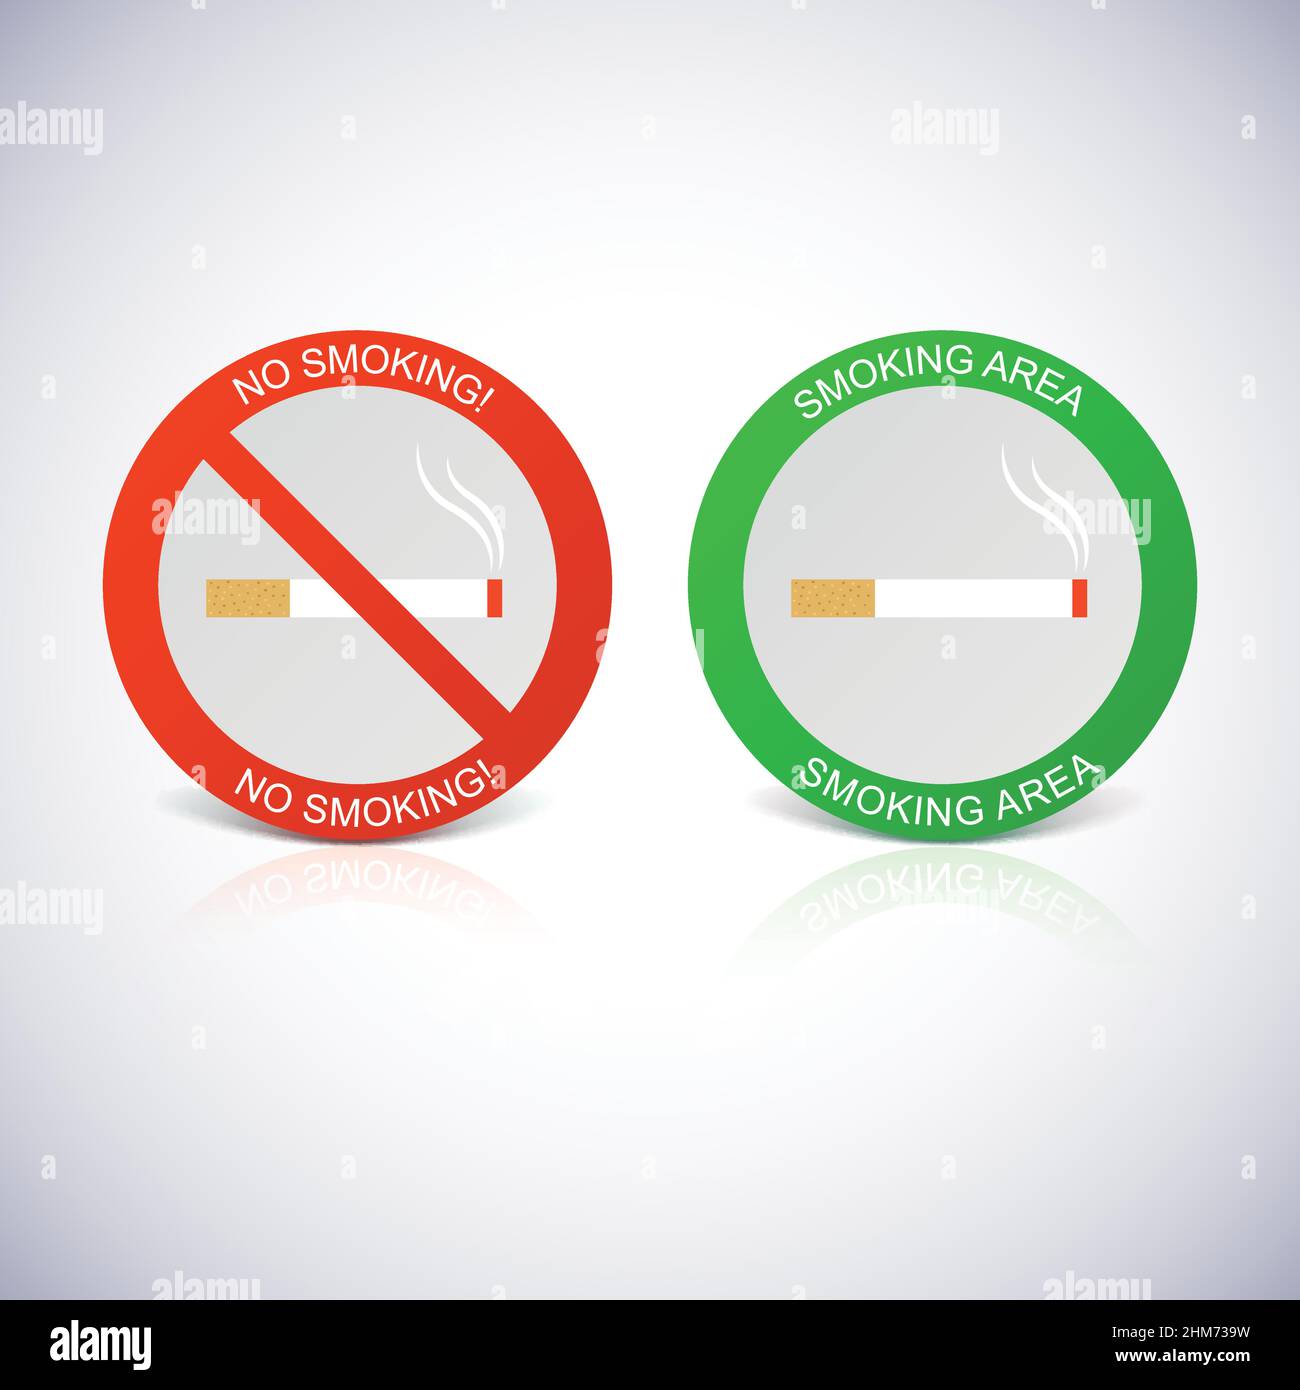 No smoking and Smoking area labels. Stock Vector